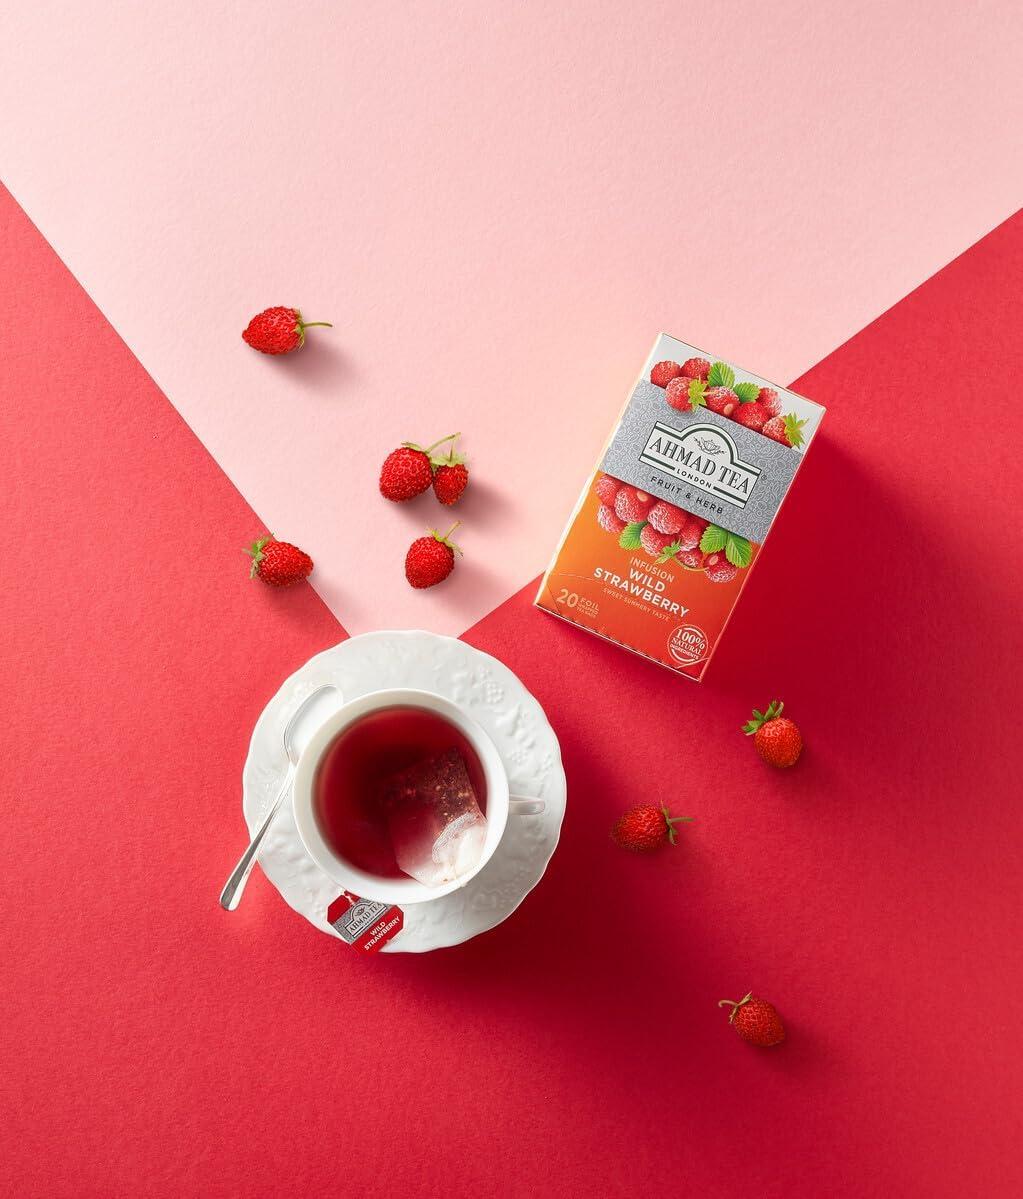 Ahmad Fruit Tea Selections 4 Flavors, 20 ct Tea Bags, 